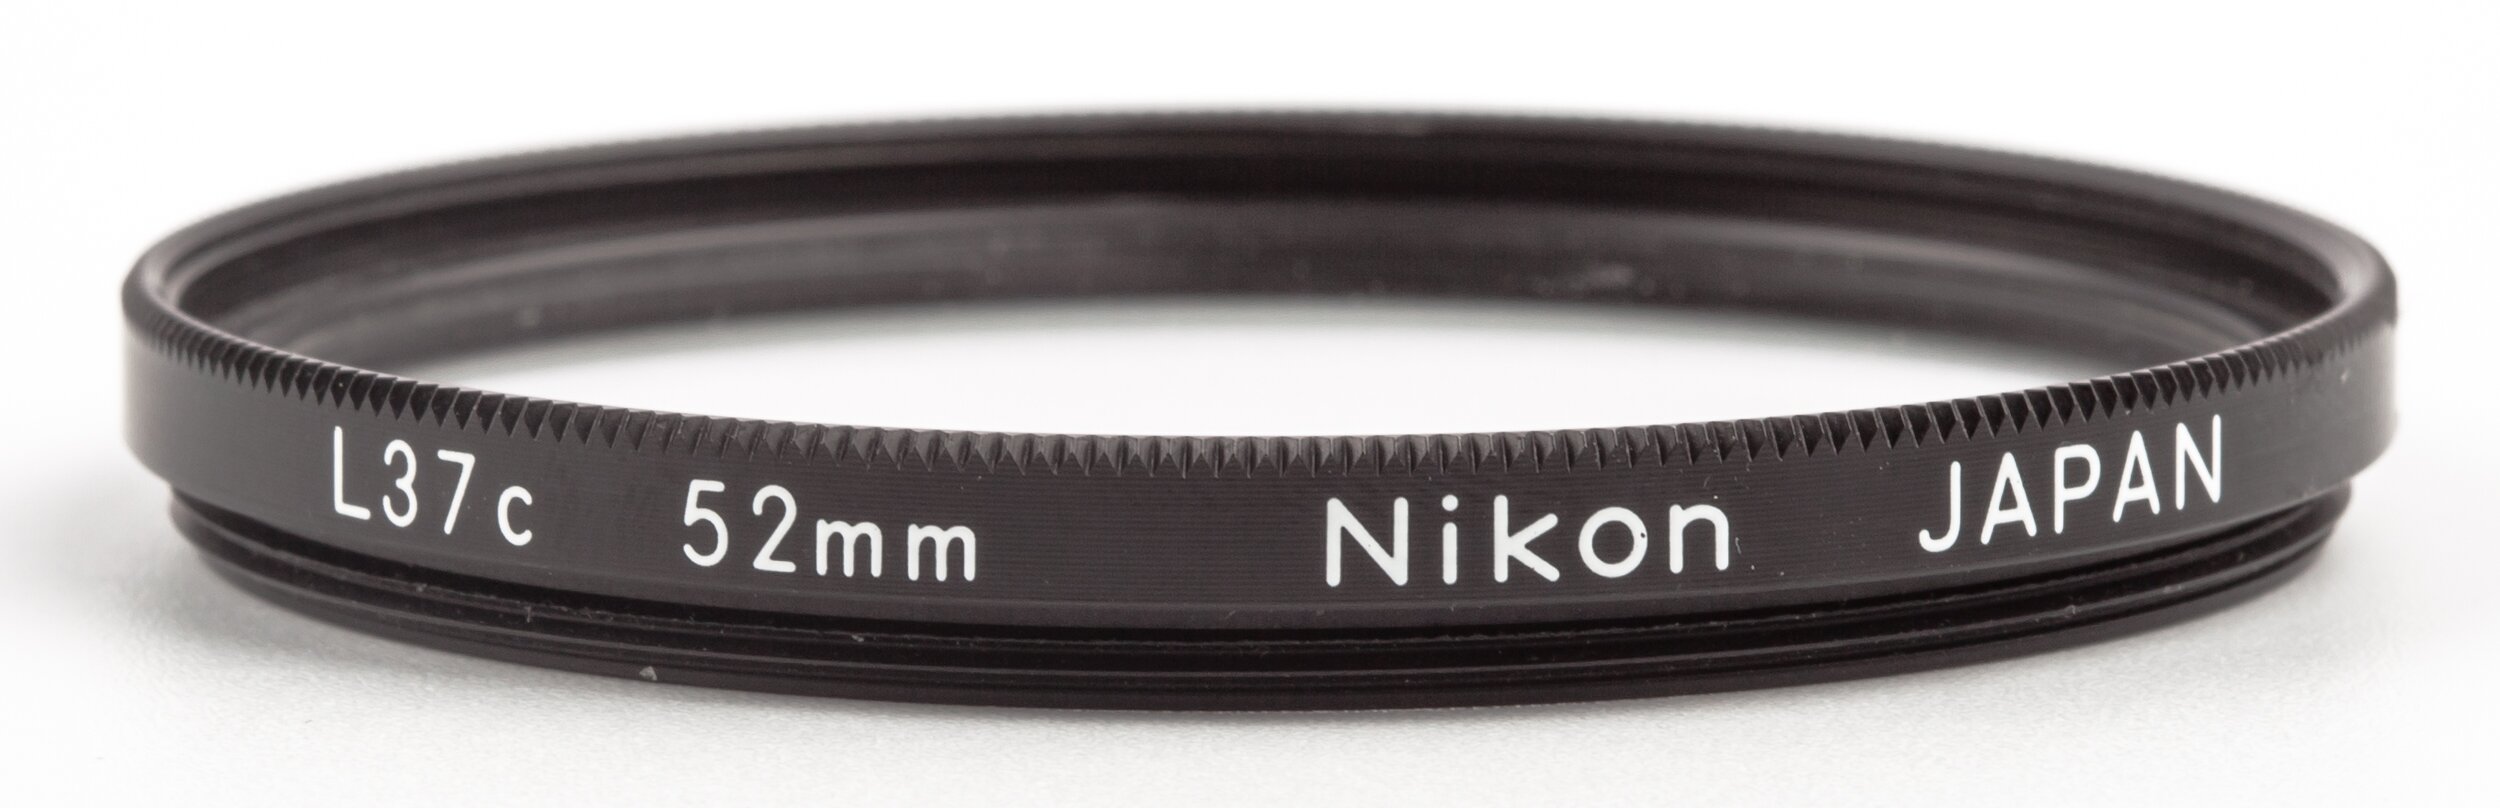 Nikon 52mm L37c UV-Filter